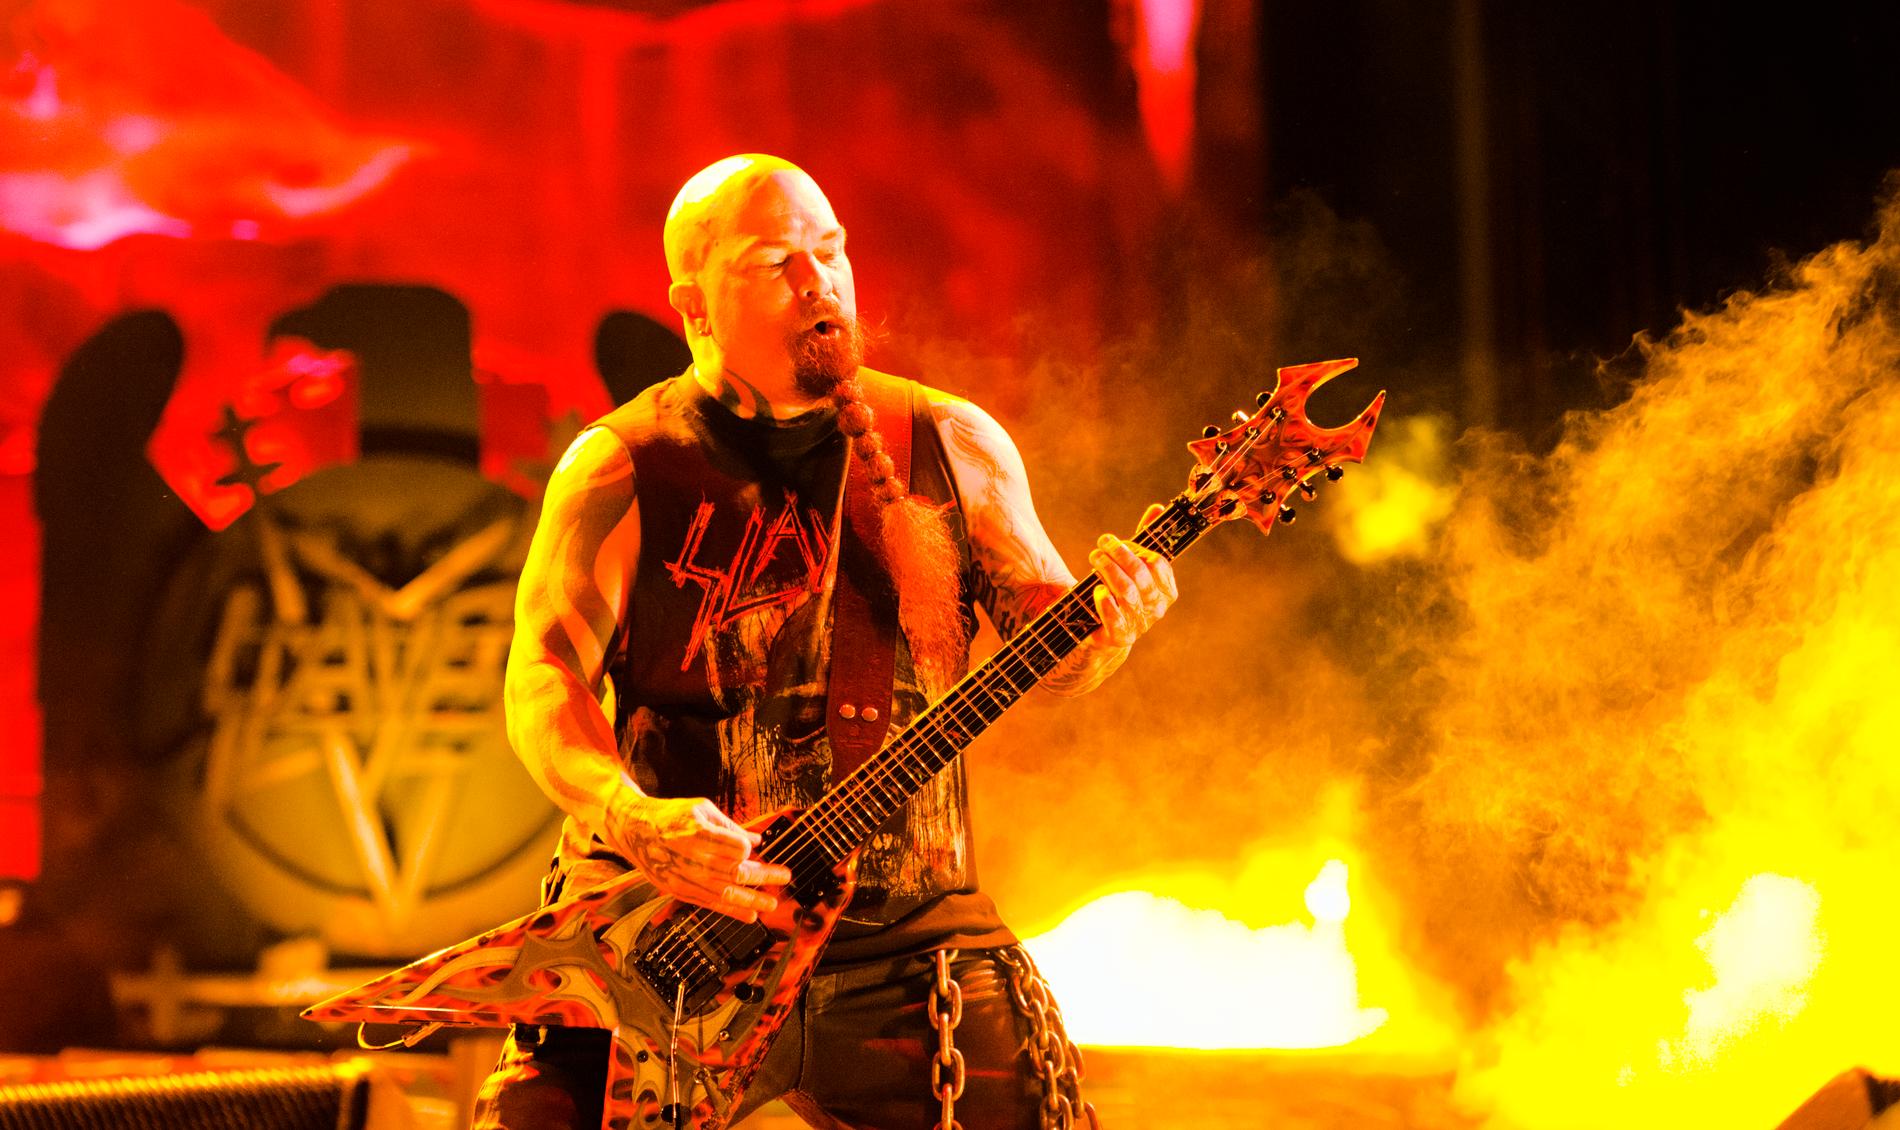 Slayers forne gitarrist är aktuell med nya singeln ”Idle hands”.